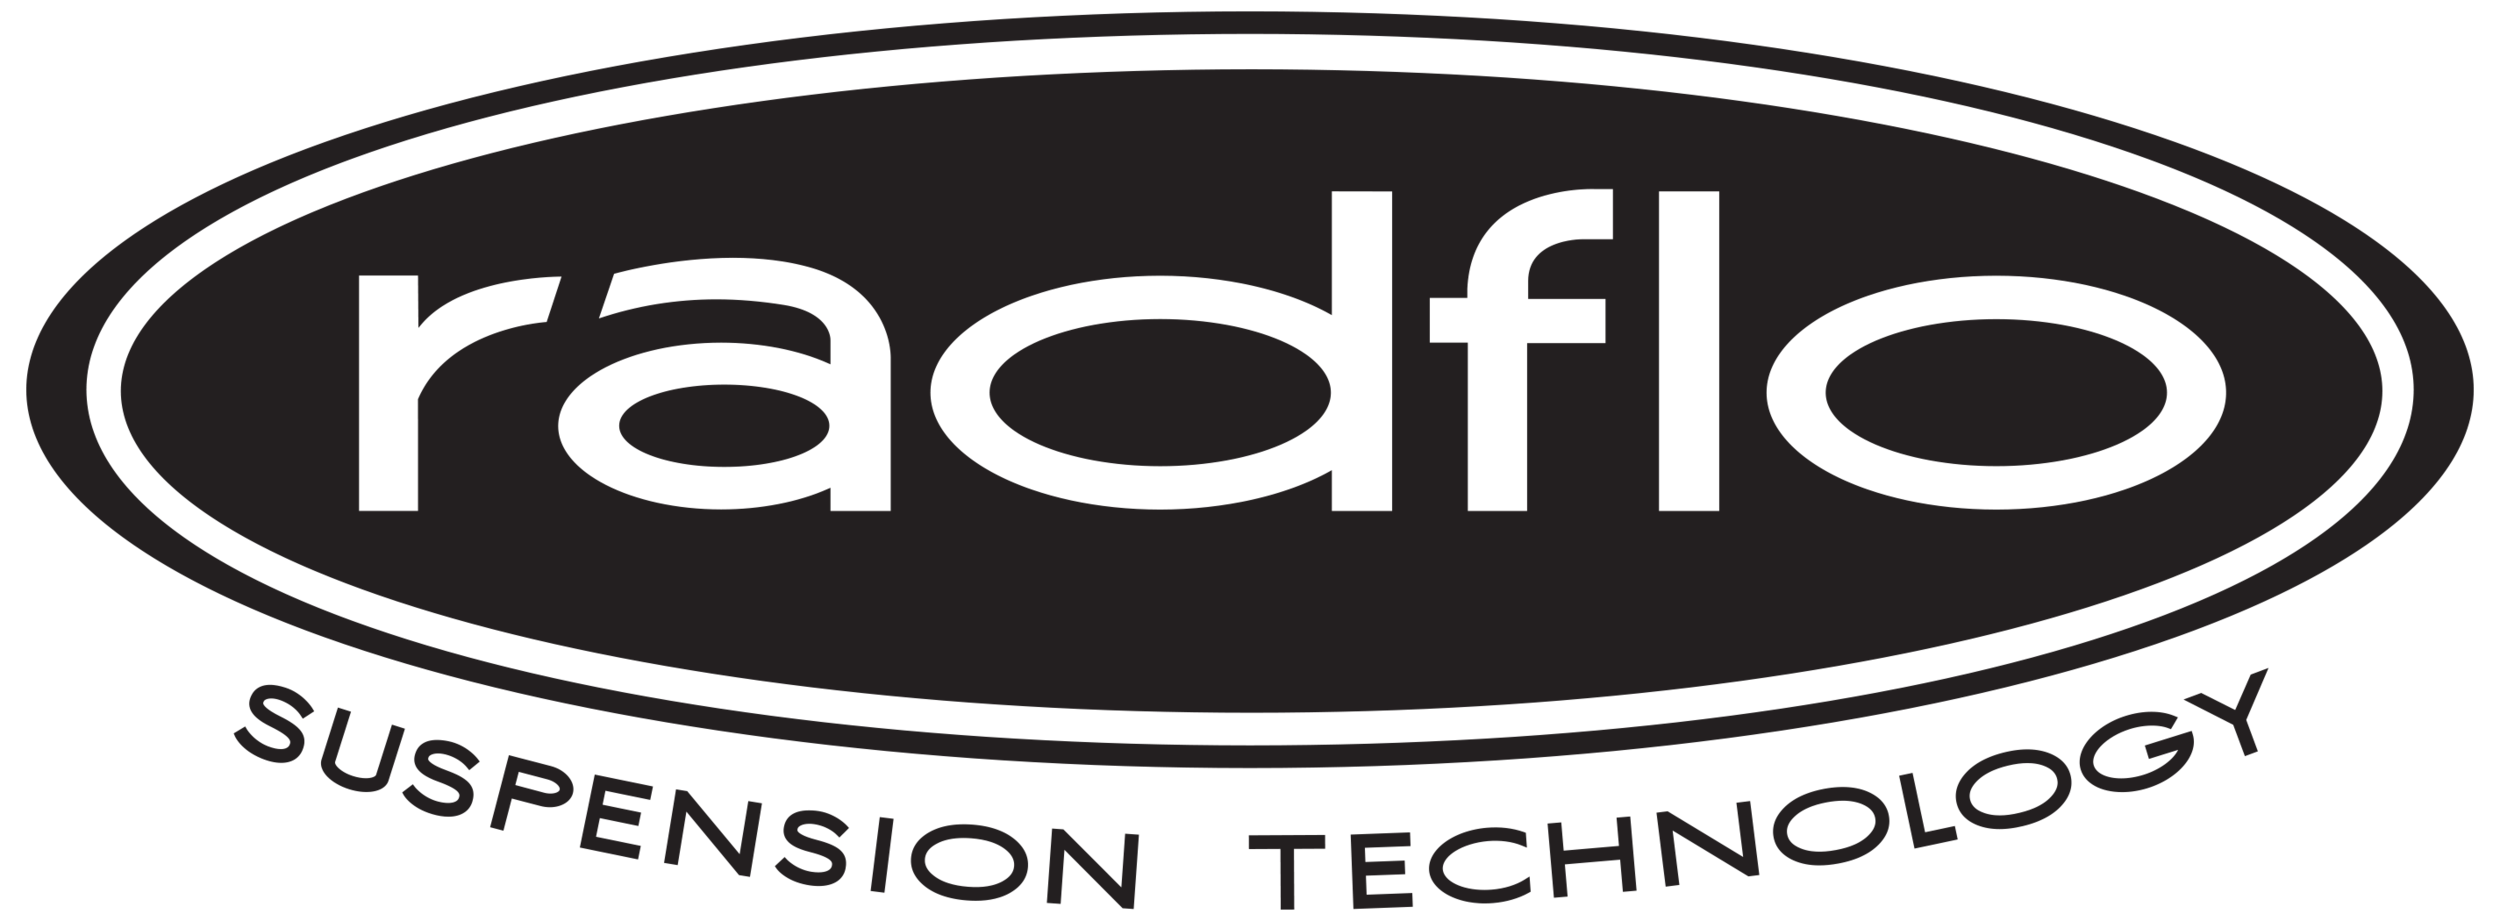 Radflo Logo Update-Transparent Bkgnd 9.5x3.5-300d.png